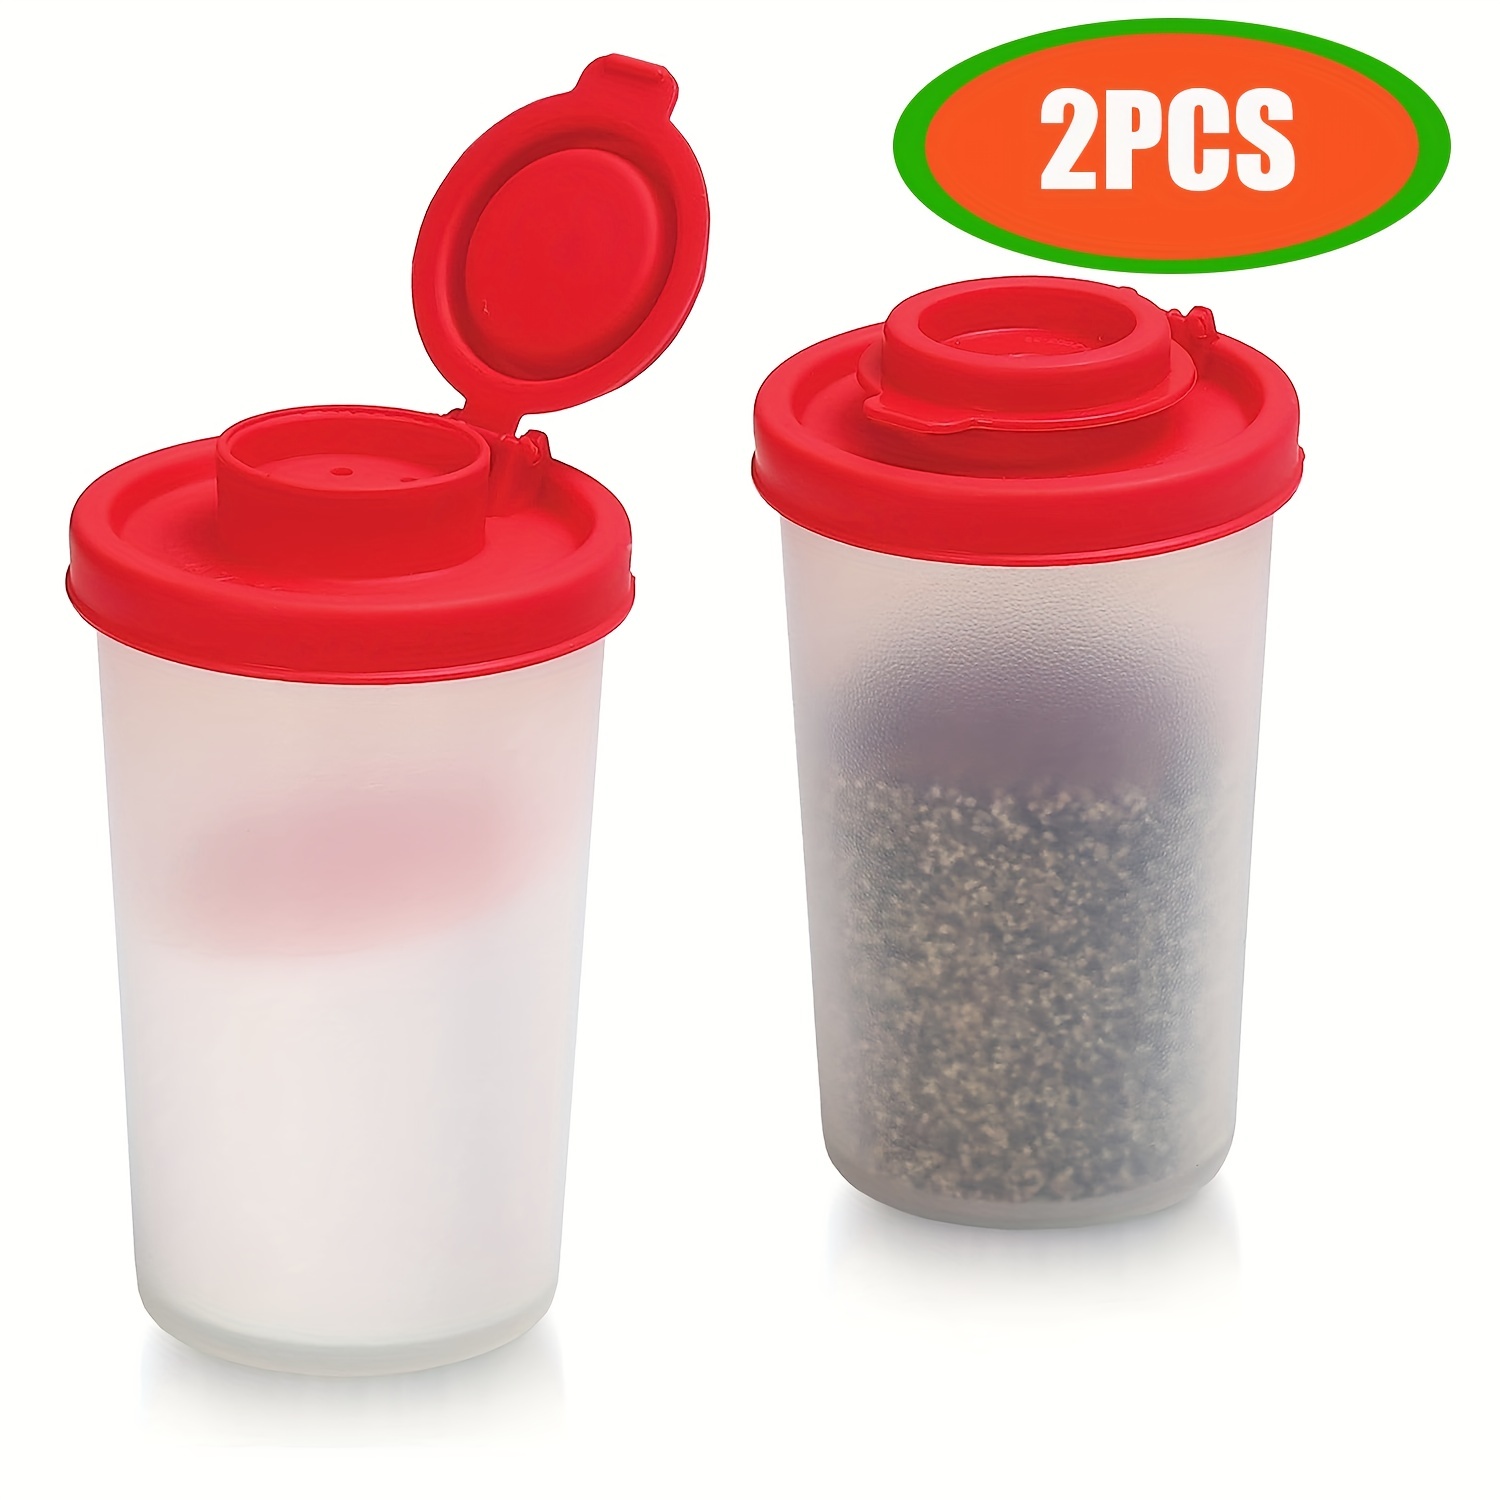 

2/3pcs Spice Shakers: Creative Plastic Seasoning Jars For Outdoor Picnic Bbq, Salt & Pepper Shakers, Kitchen Utensils & Apartment/college Dorm Essentials